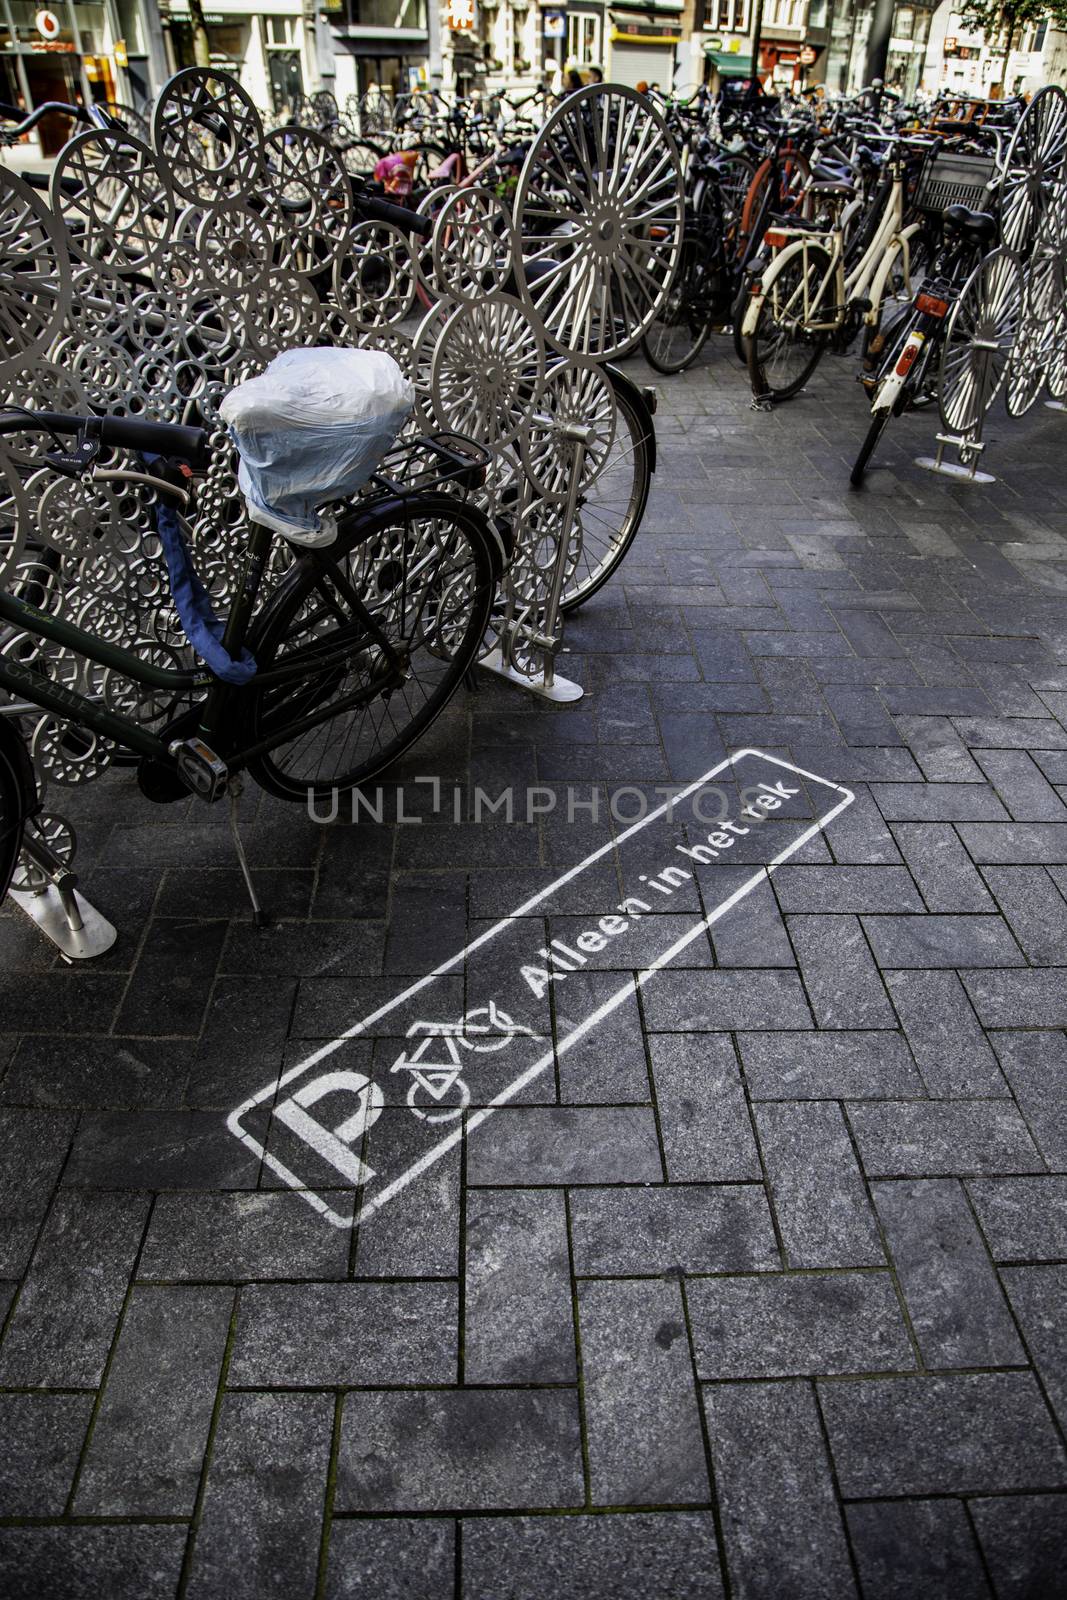 Bicycle parking in Amsterdam by esebene